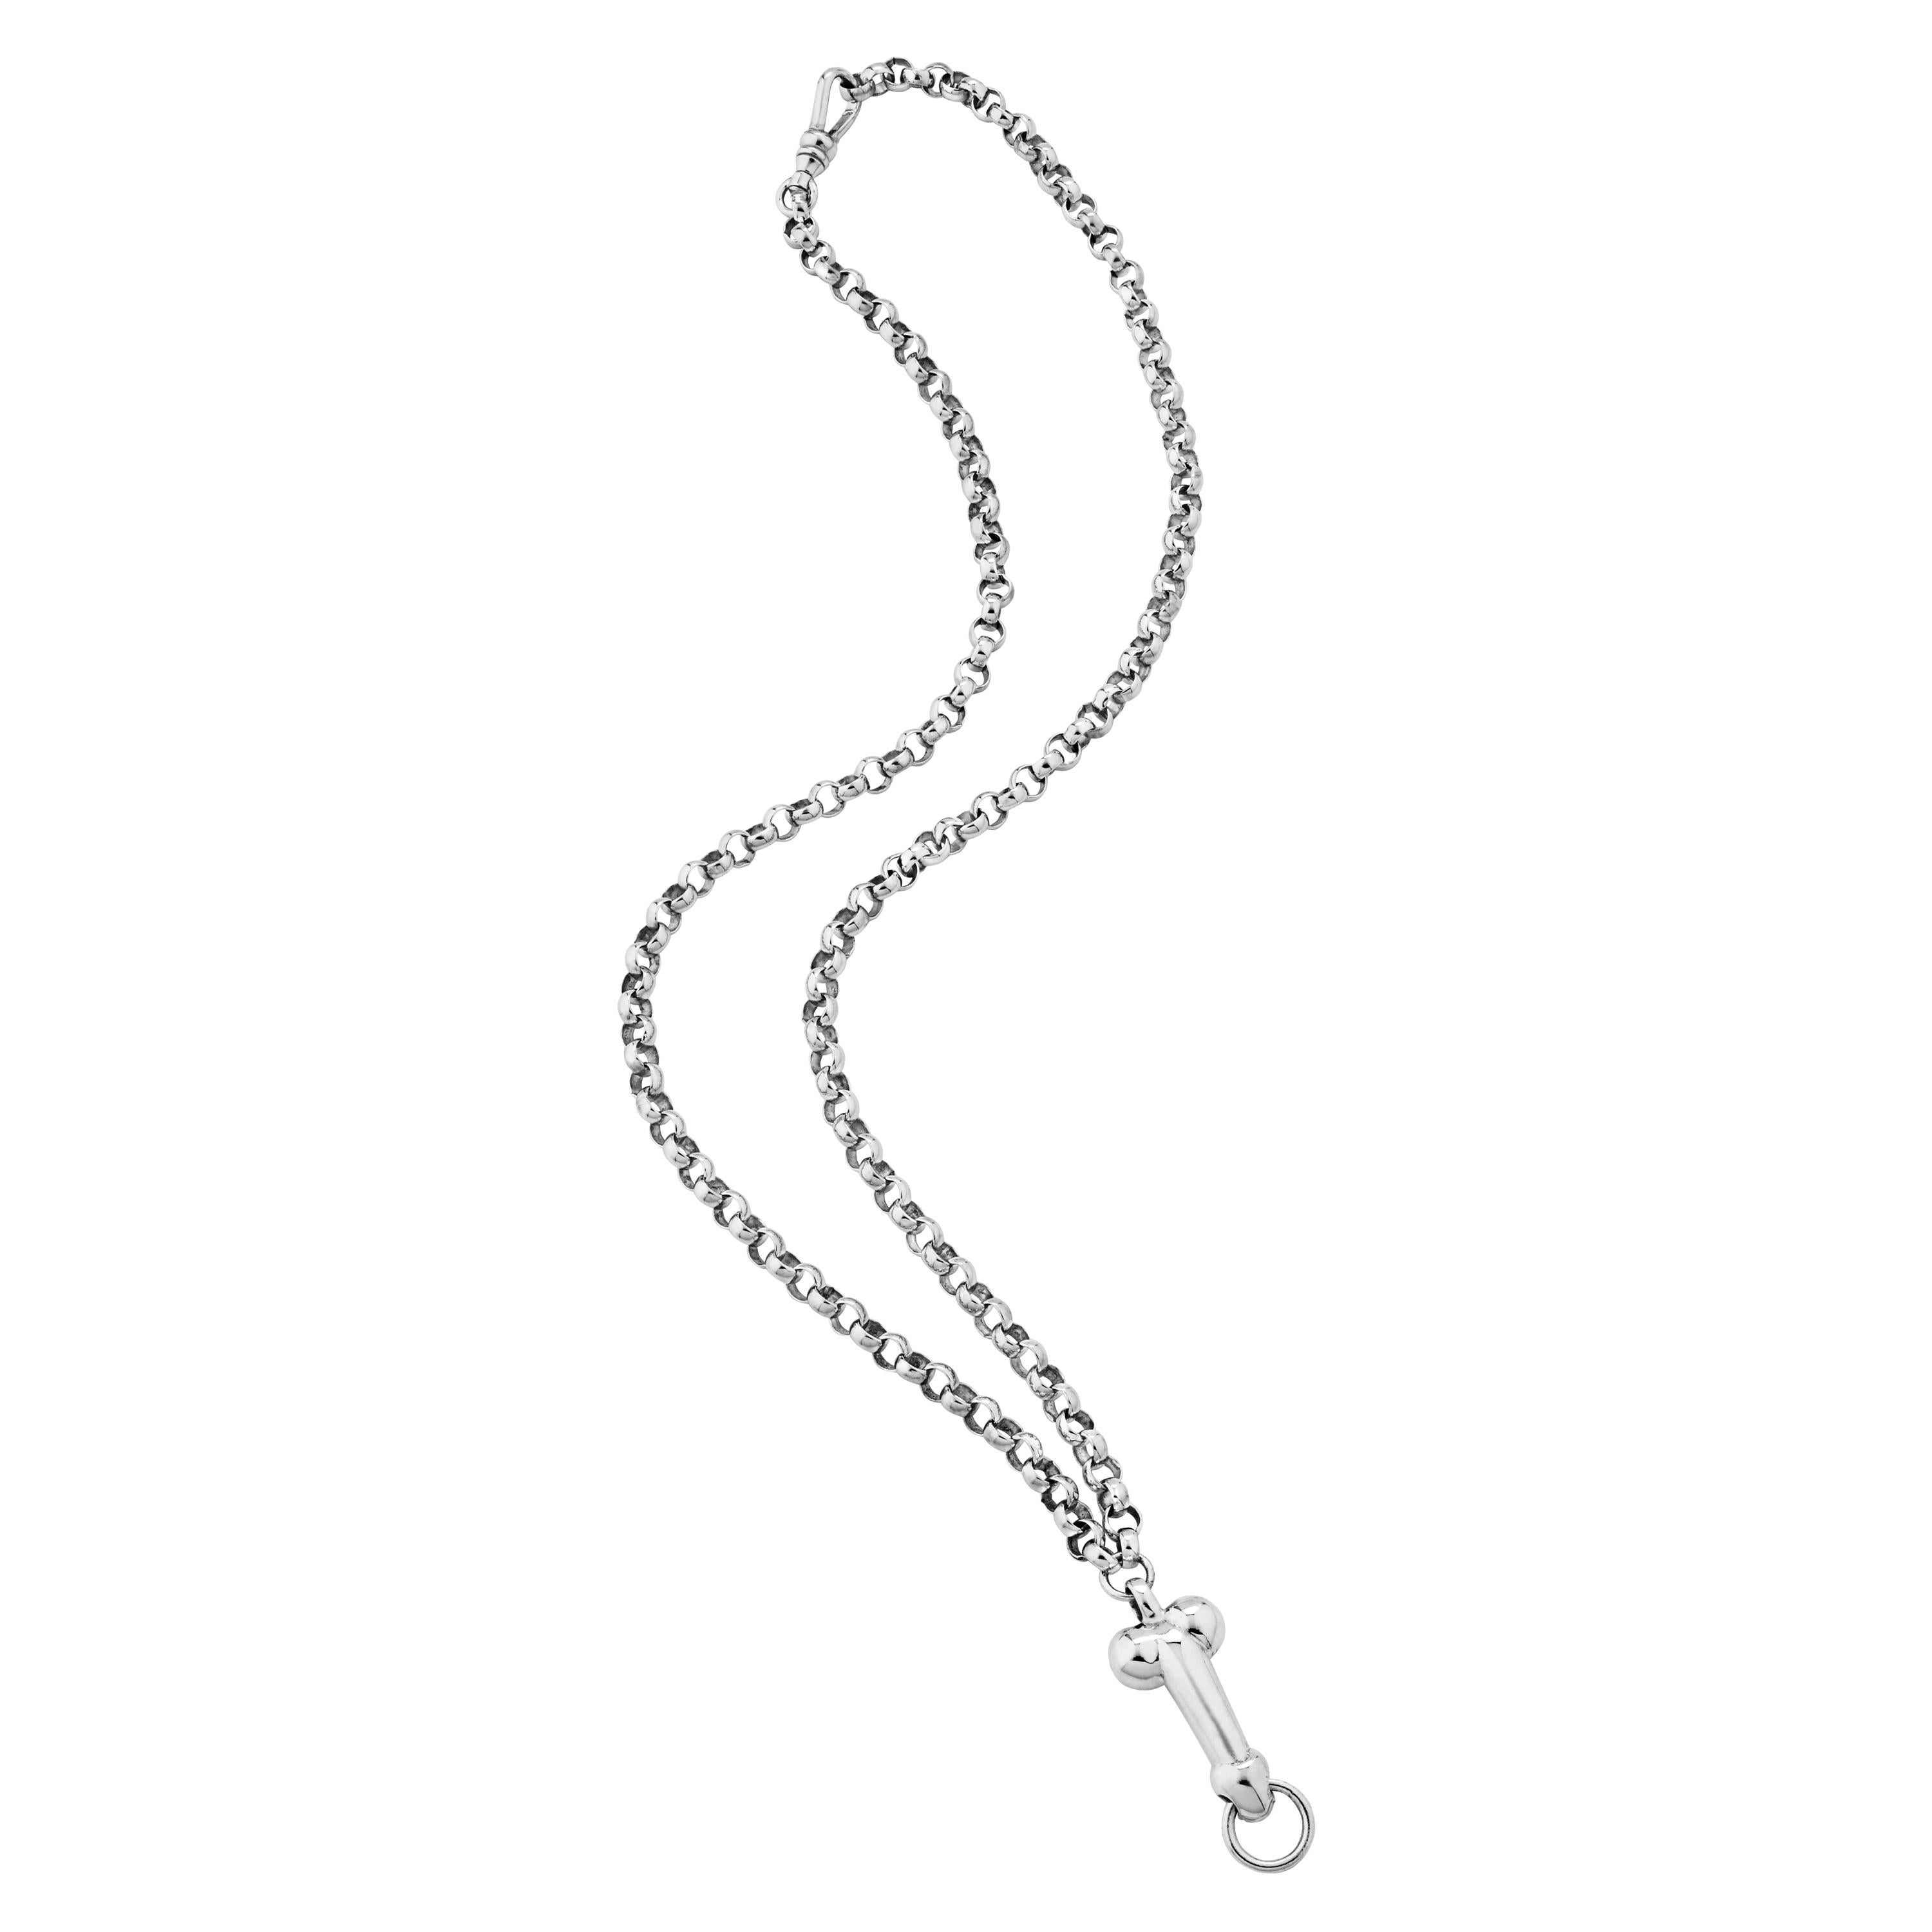 Betony Vernon "Pierced Pendant" Necklace Sterling Silver 925